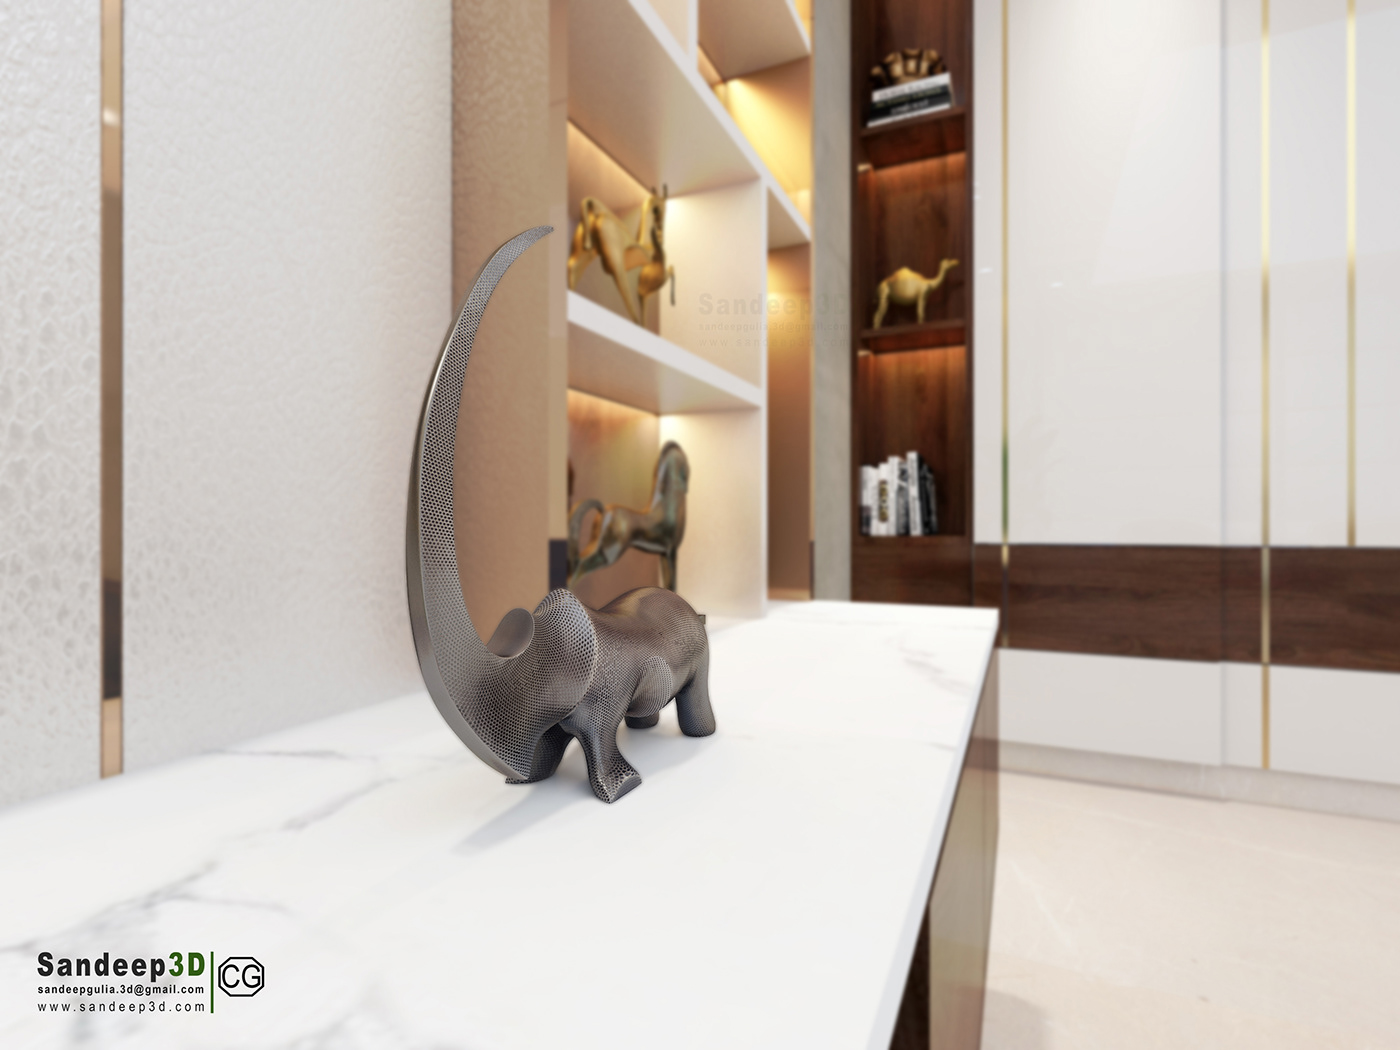 Interior modern visualization 3D vray photoshop creative rendring design bedroom